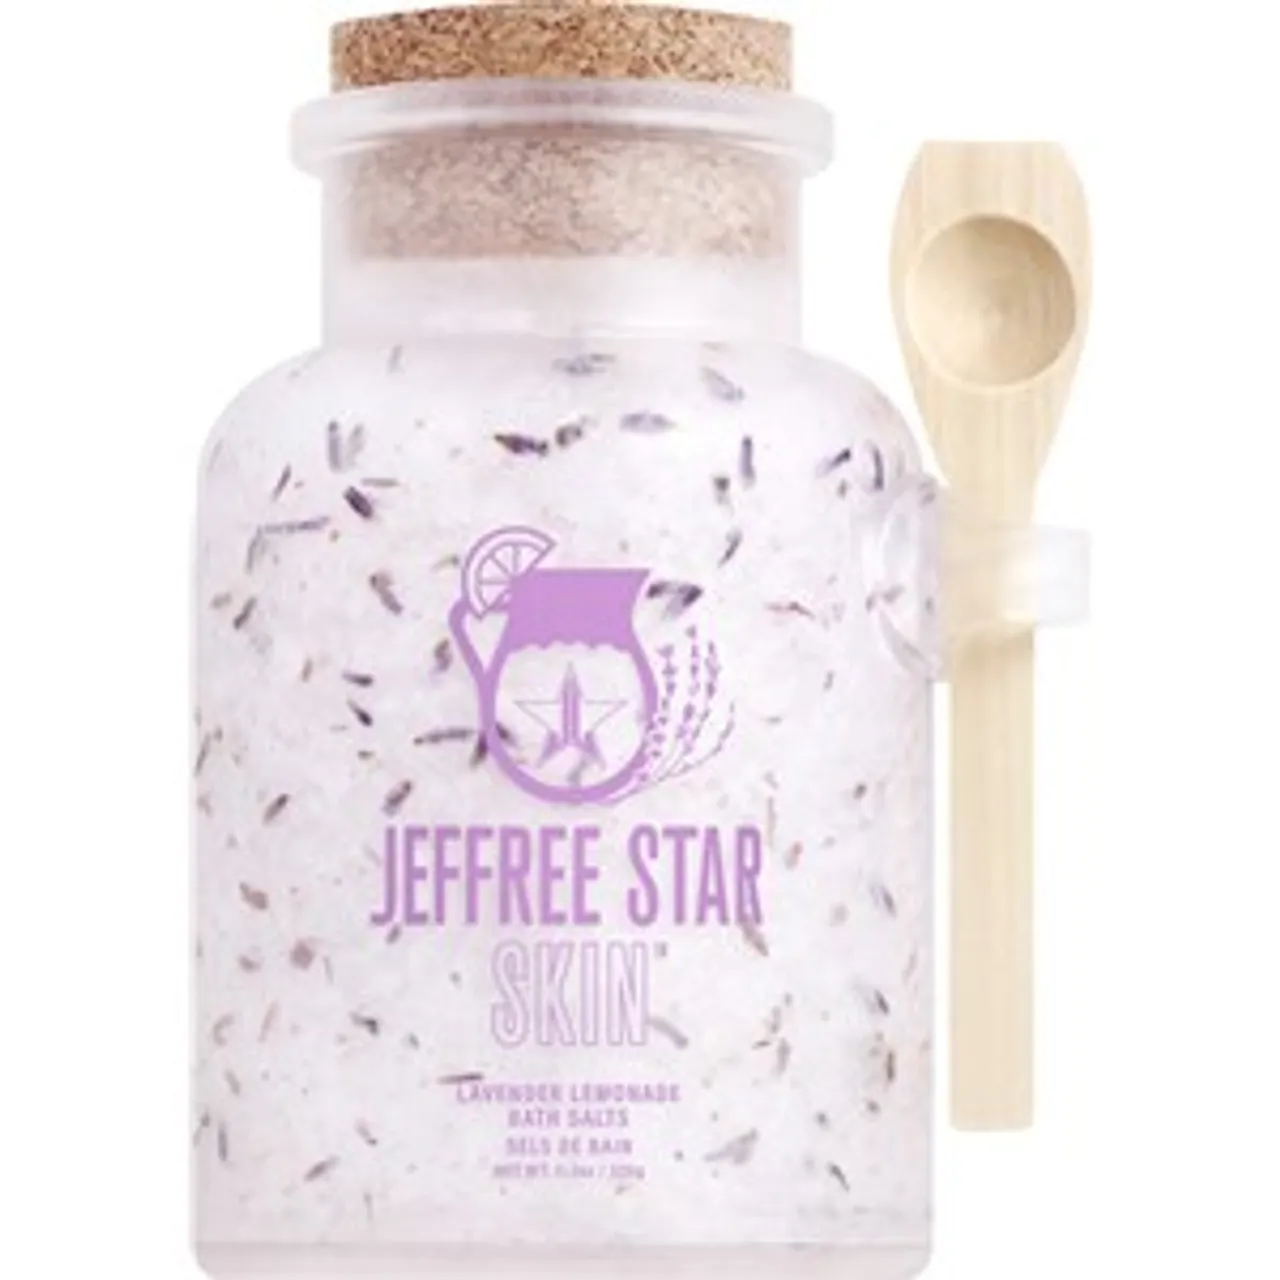 Jeffree Star Cosmetics Reinigung Lavender Lemonade Bath Salts Badesalz & Badebomben Damen